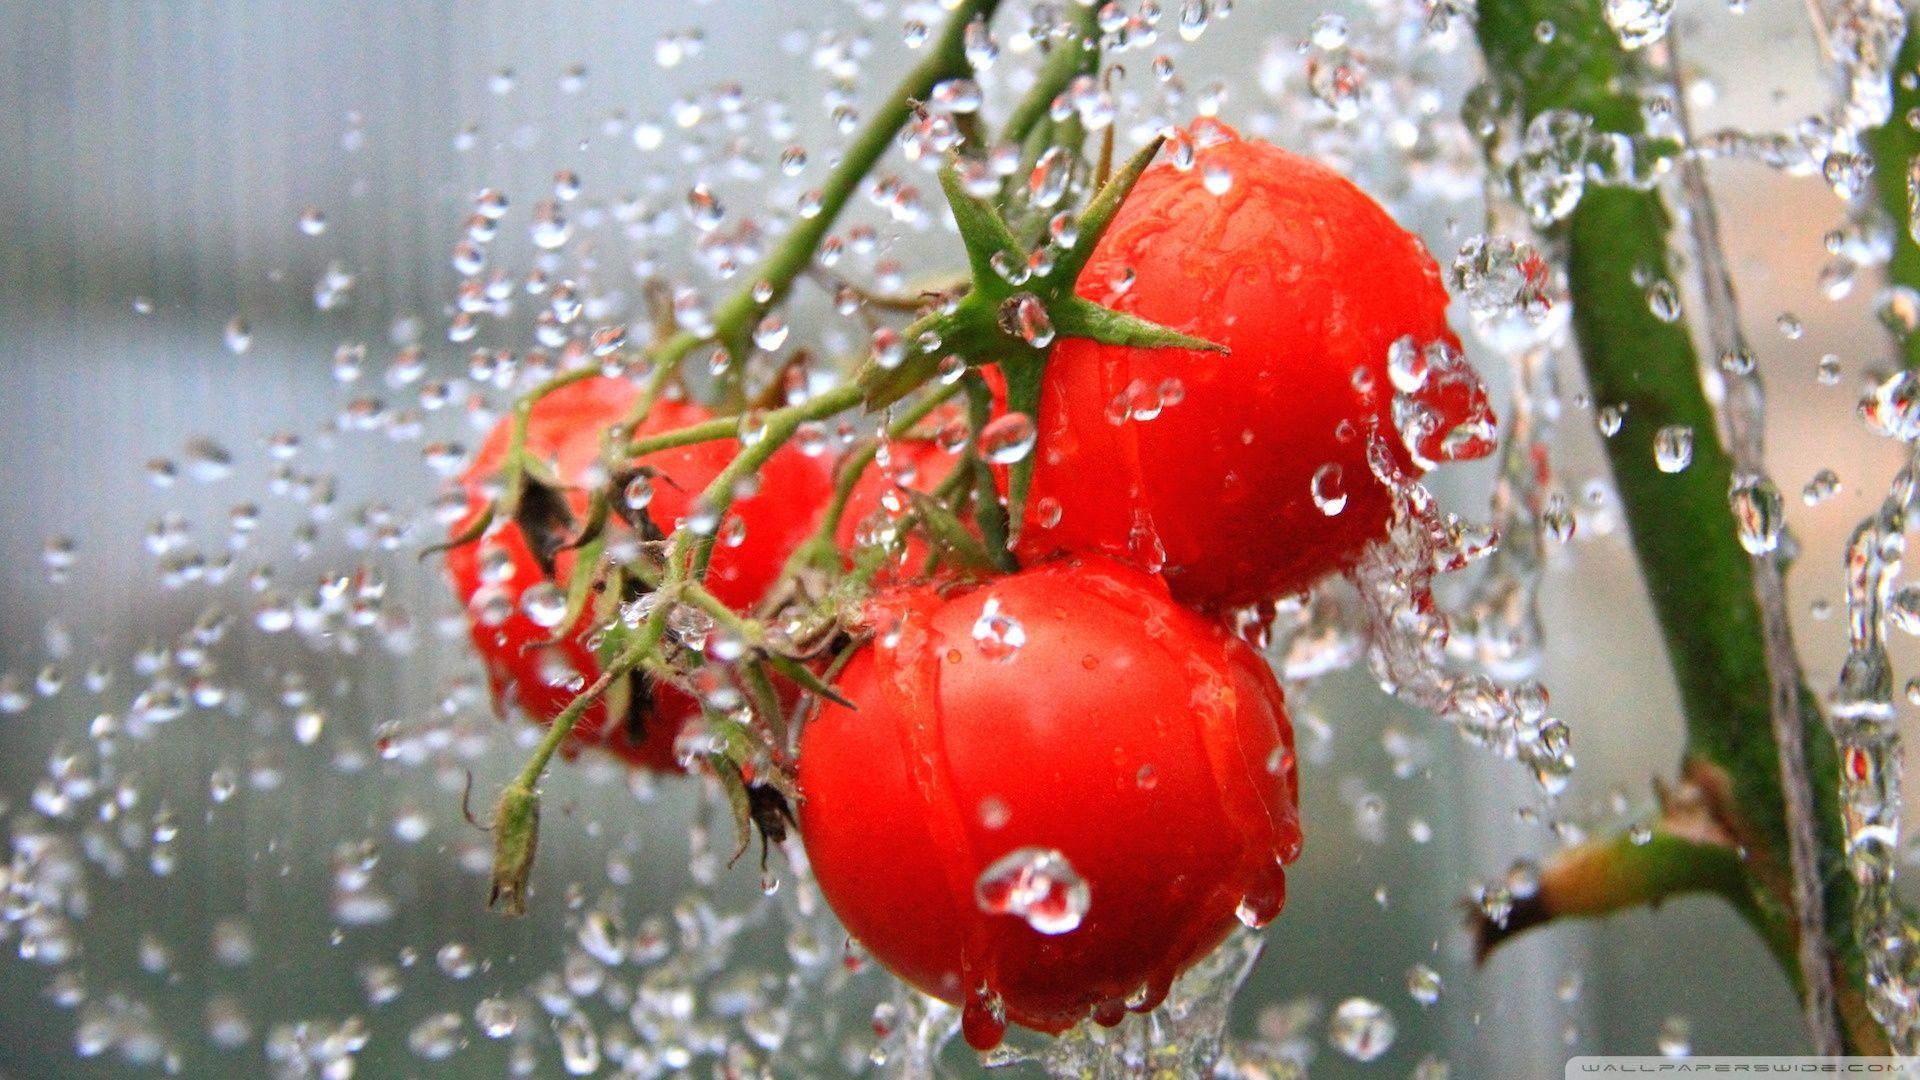 The Tomato Shower HD desktop wallpaper, High Definition